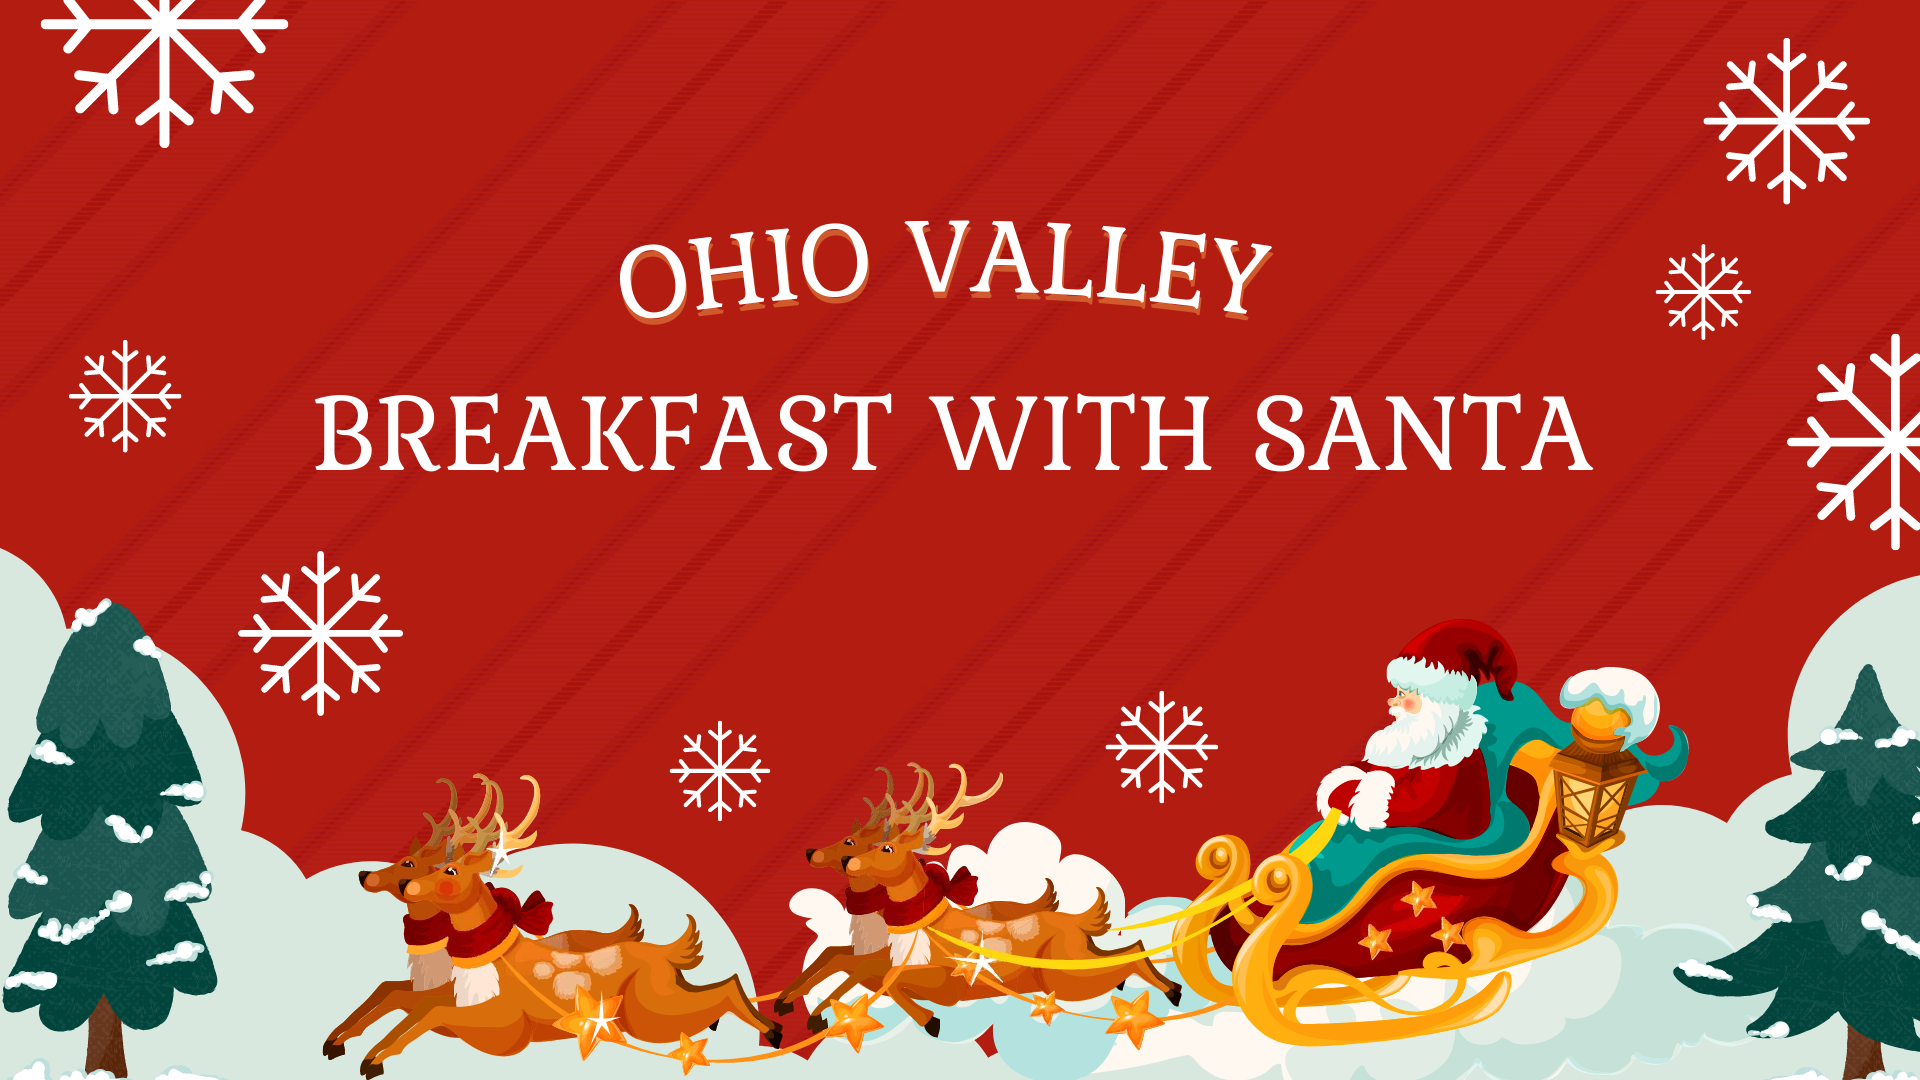 Ohio Valley Breakfast with Santa photo